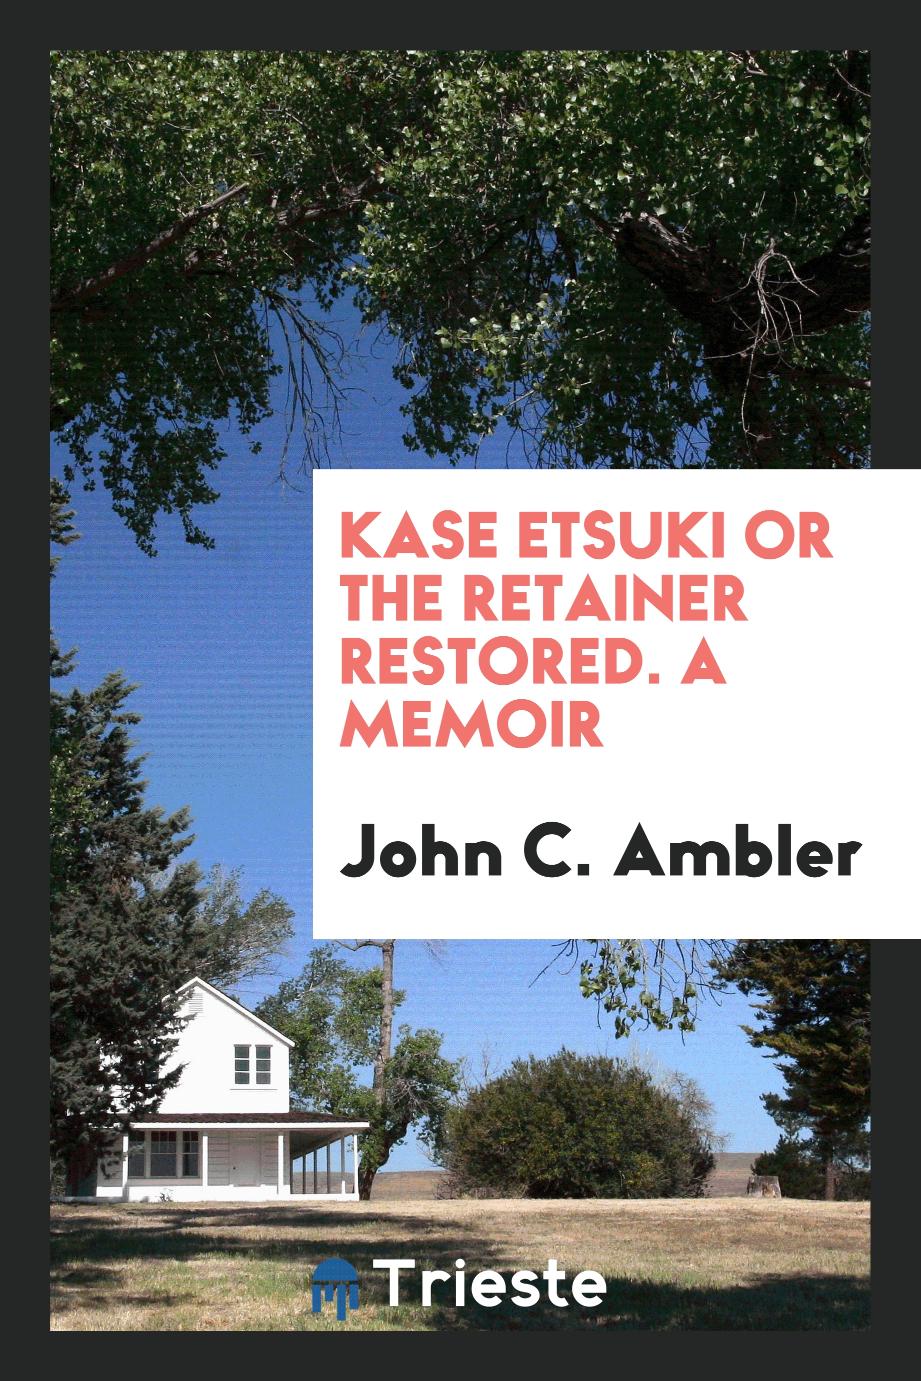 Kase Etsuki Or The Retainer Restored. A Memoir